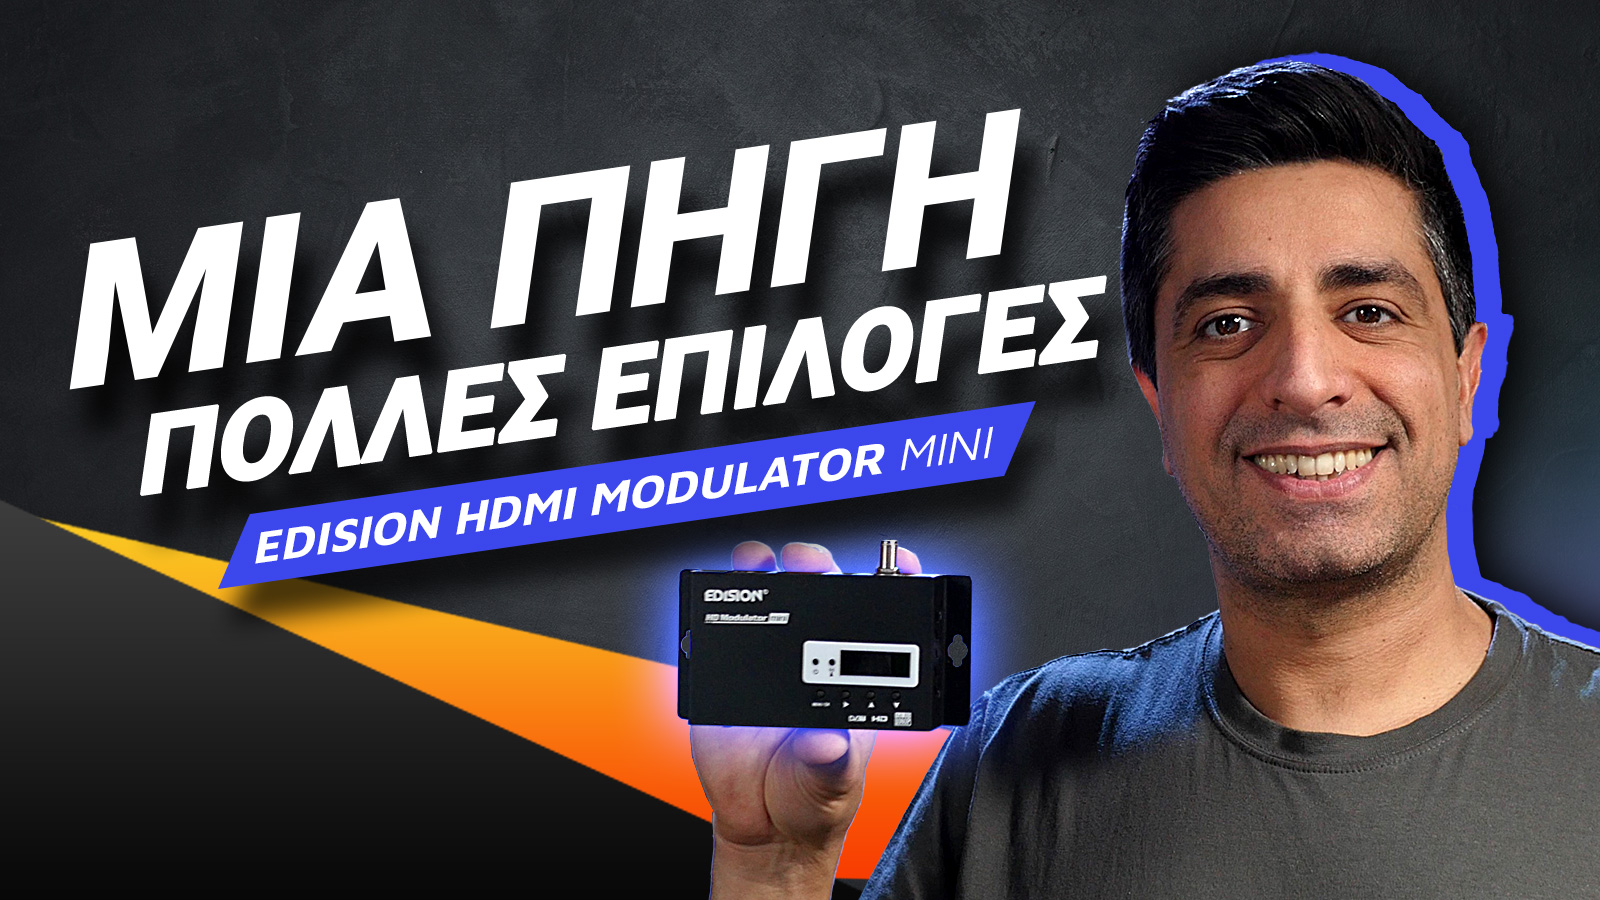 , EDISION HDMI MODULATOR mini review: Μια πηγή, πολλές επιλογές